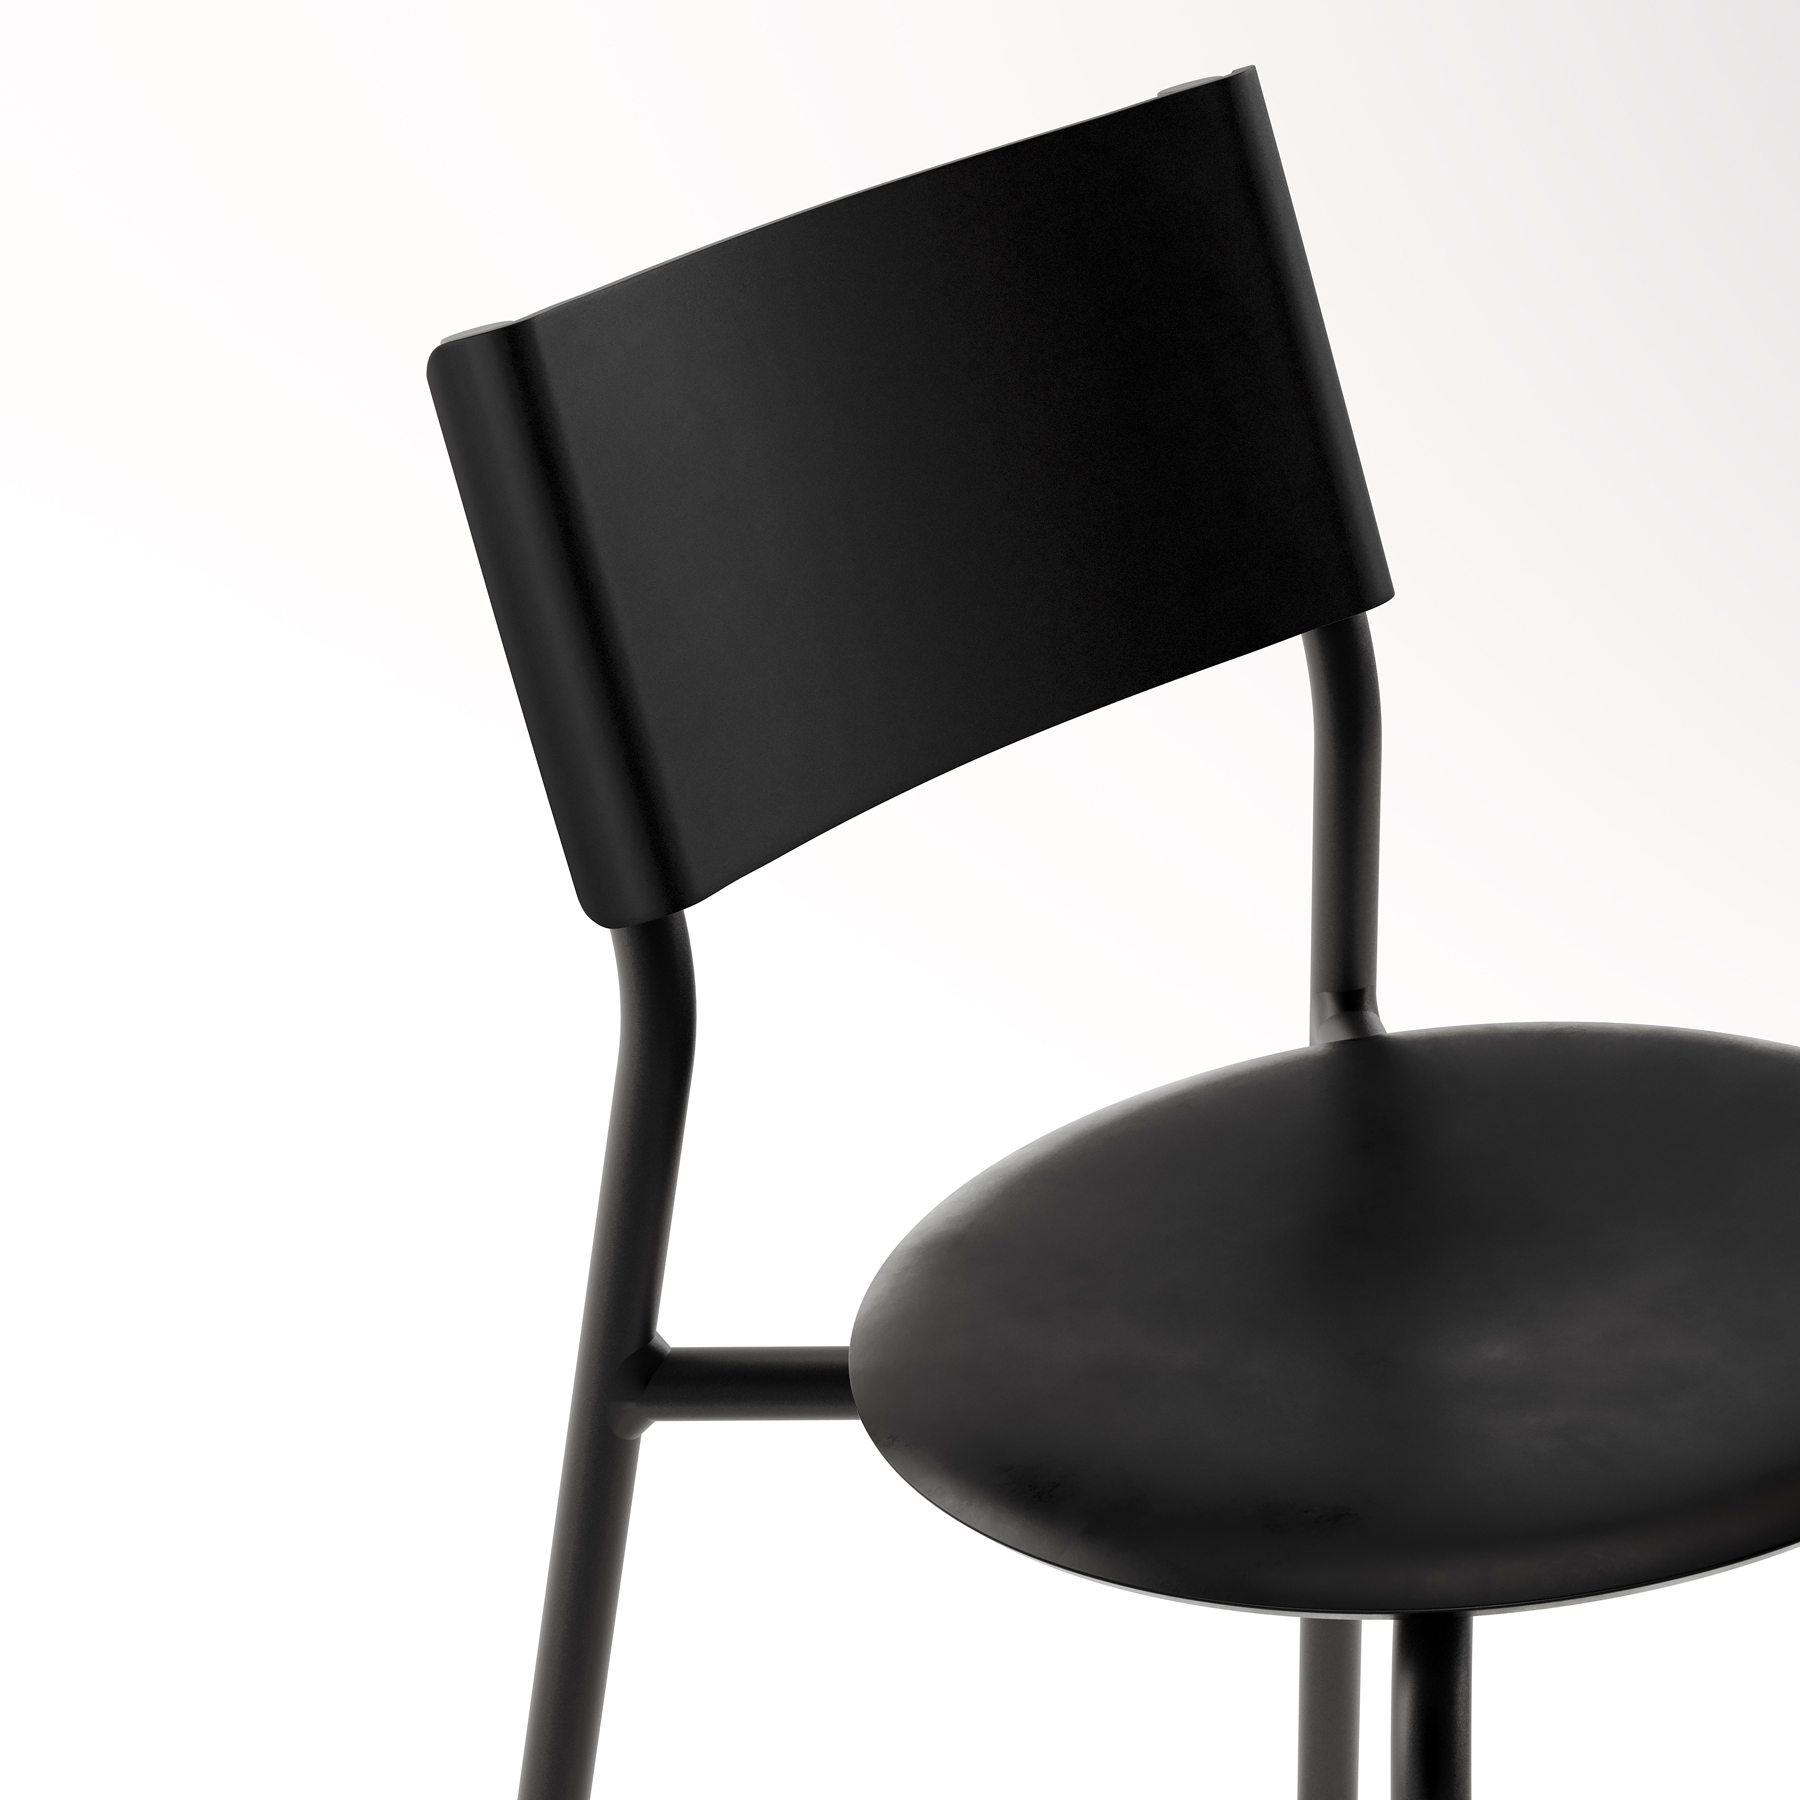 SSDr bar chair - recycled plastic - 75cm